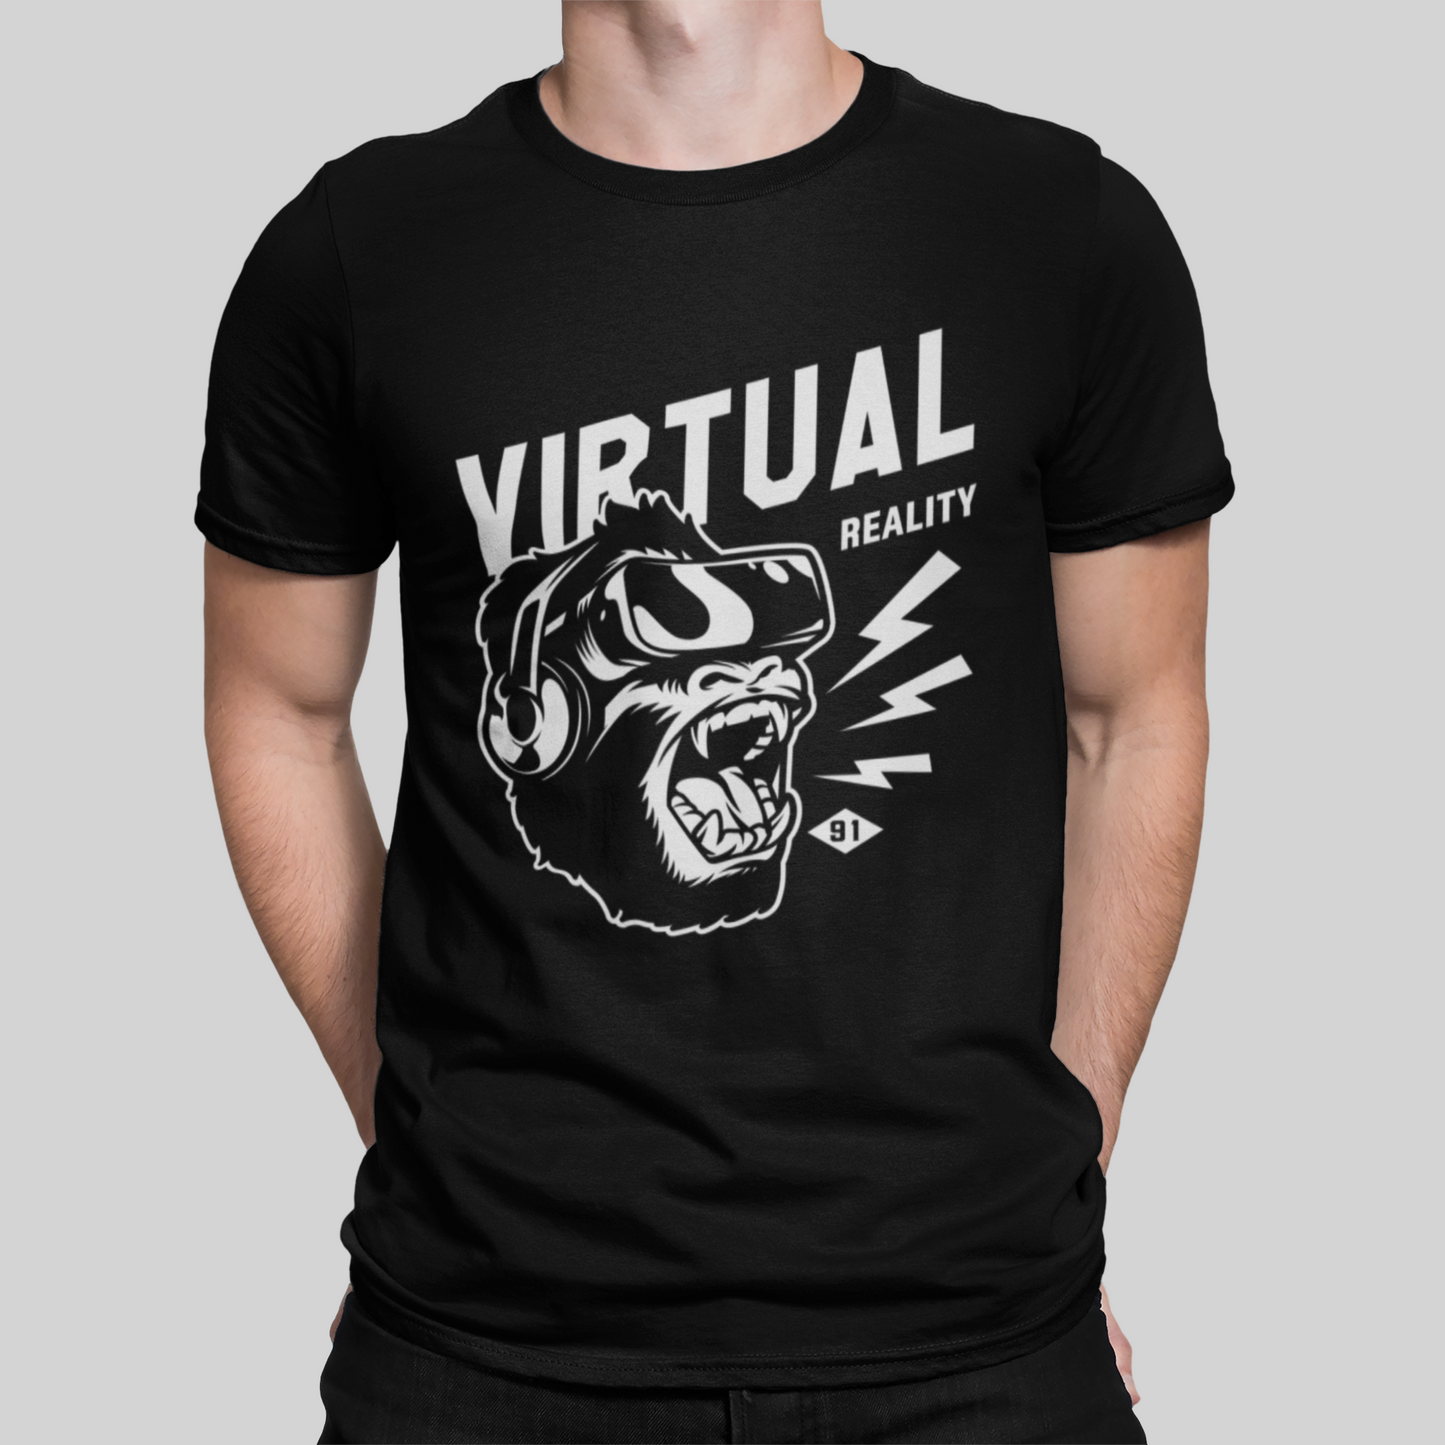 Virtual Reality Black T-Shirt For Men